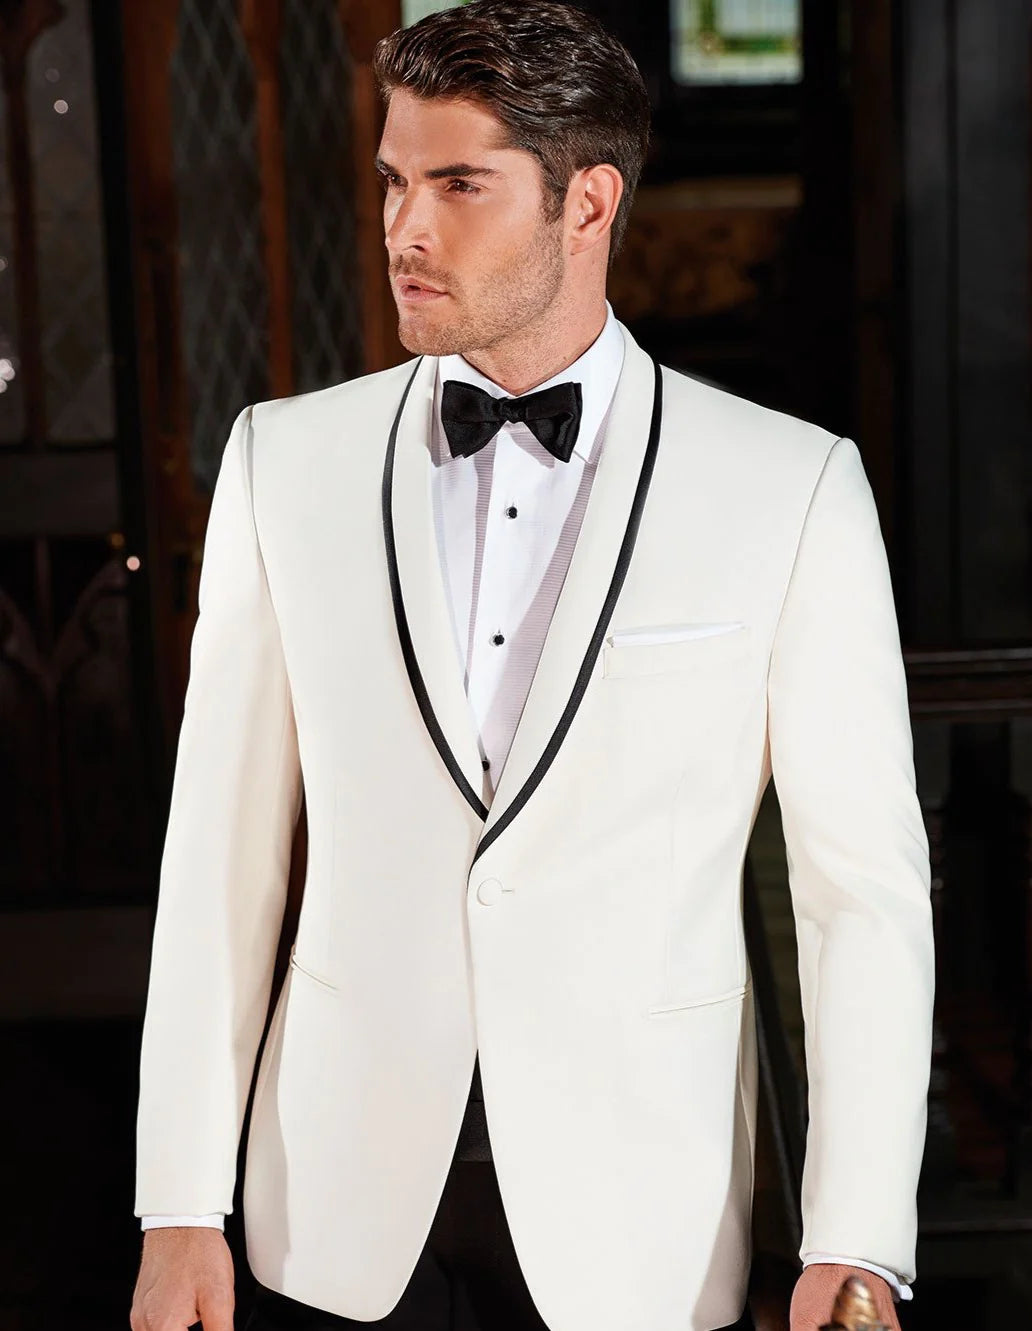 "Mens Suit Designer Charles Shawl Dinner Jacket in Ivory with Black Trim"